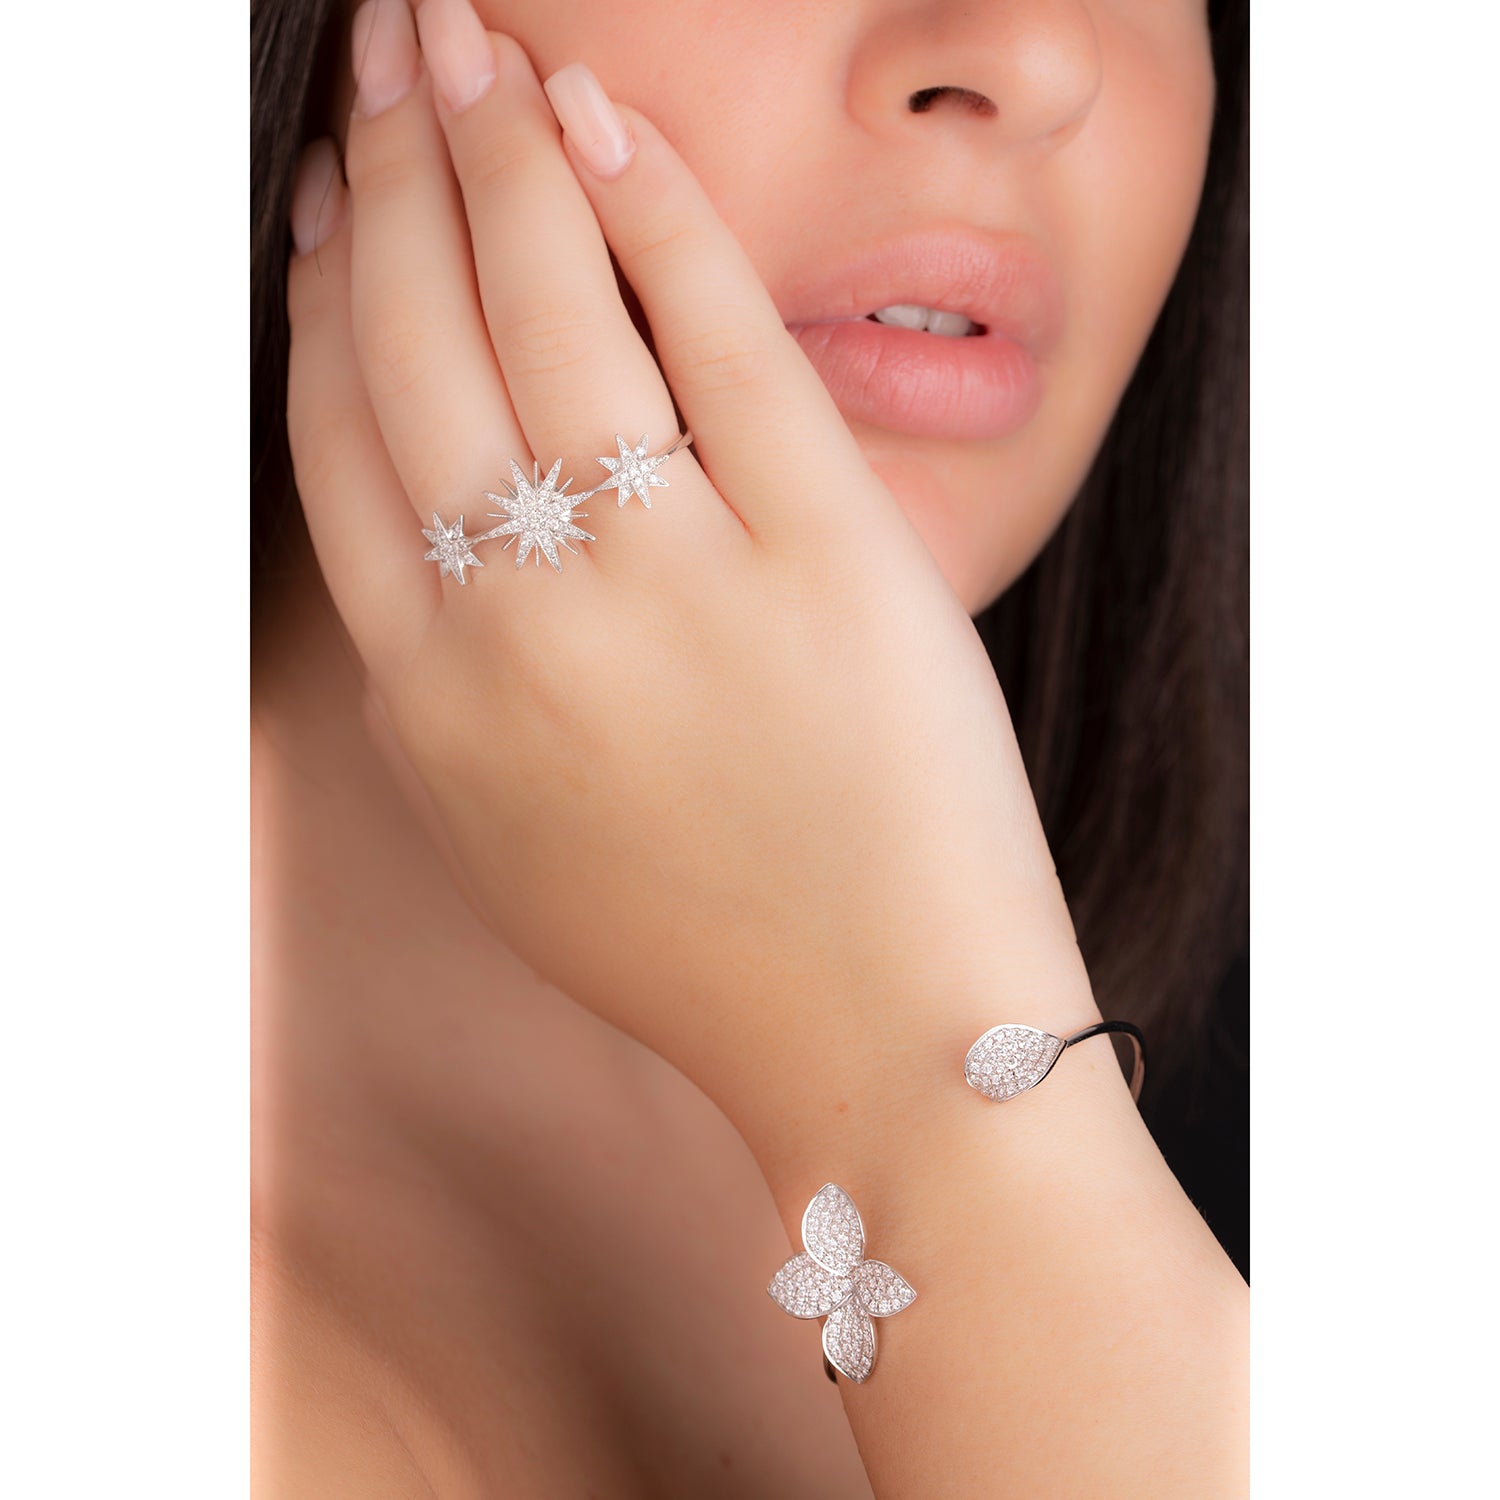 XSBODY Zircon Palm Bracelet For Women Adjustable Wedding Cuff Bangle With  Bridal Jewelry Style From Sunnyroom, $10.34 | DHgate.Com